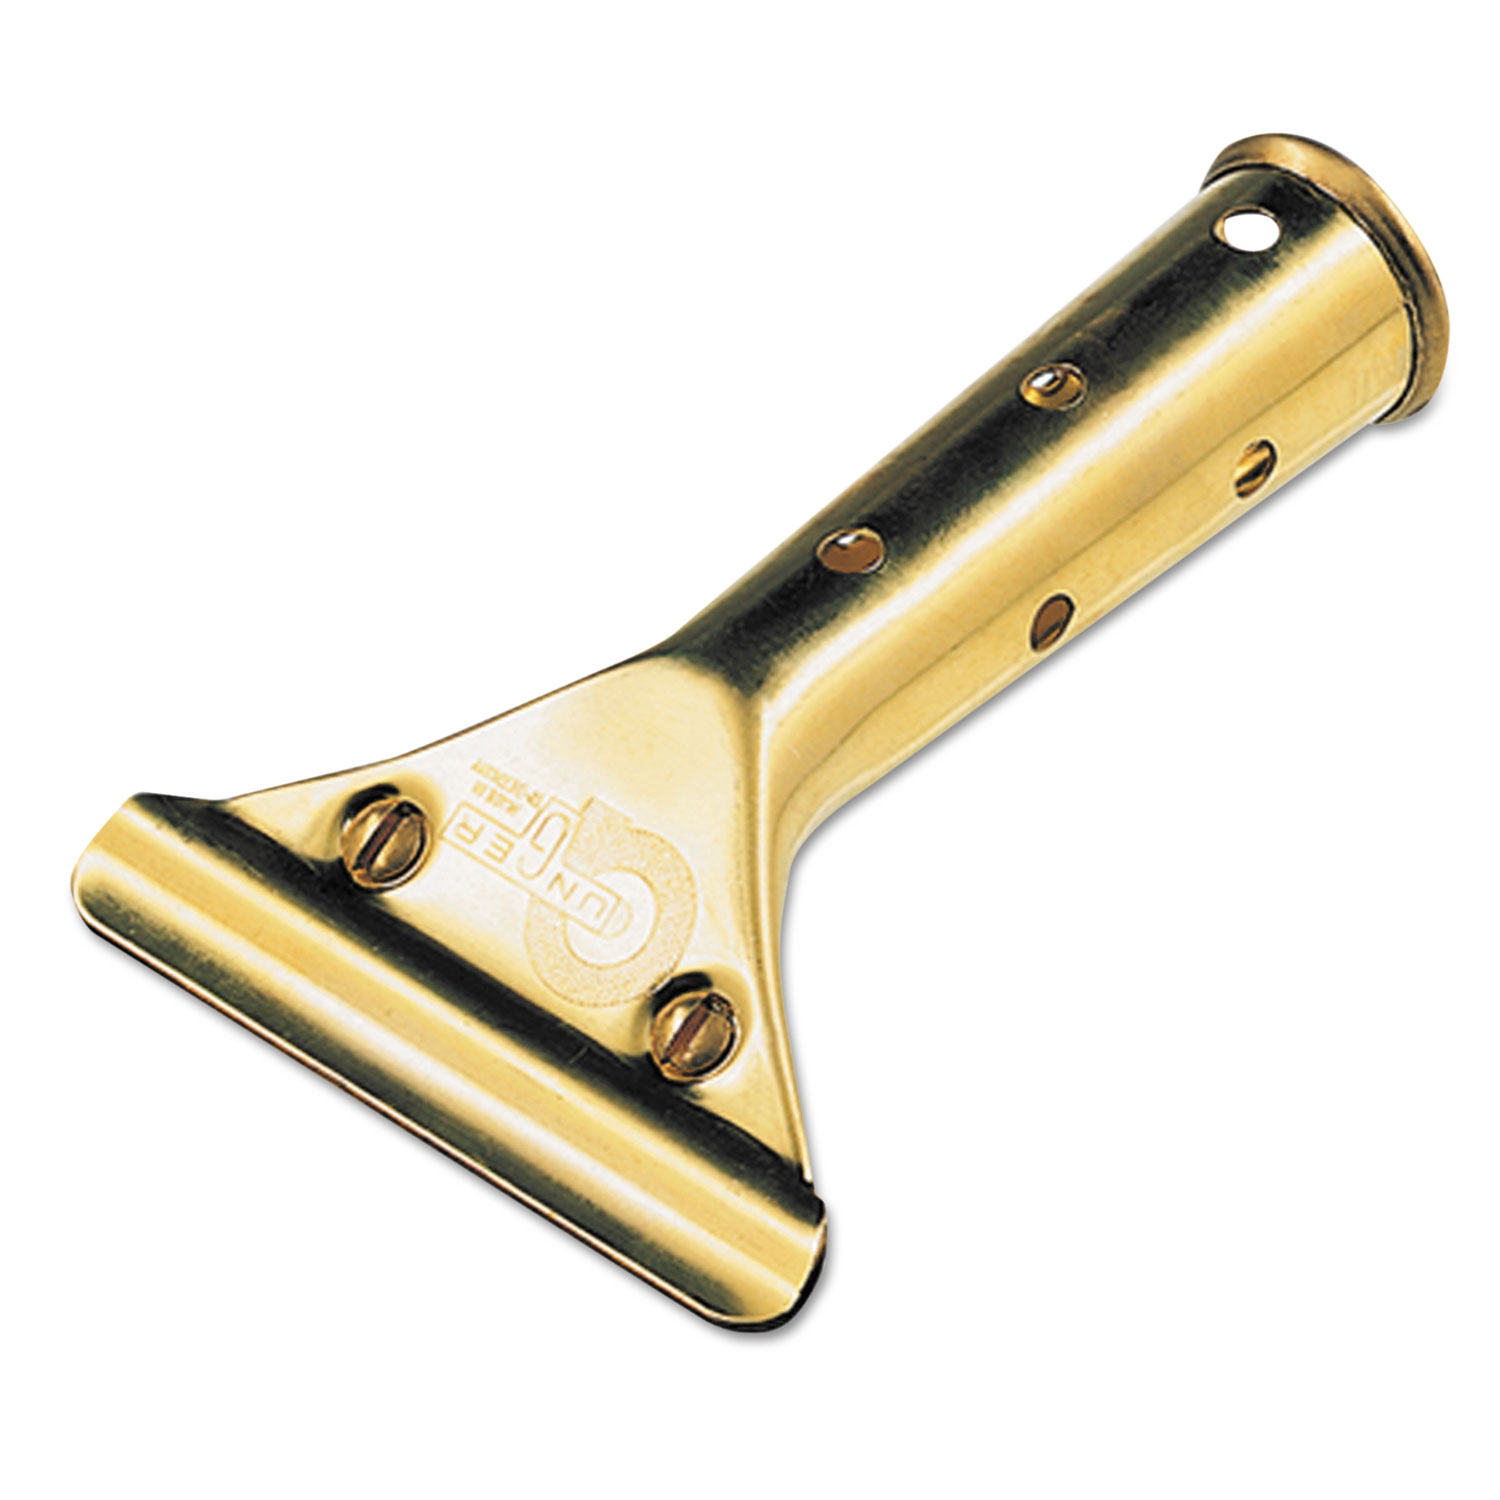  Unger GS000 Golden Clip Brass Squeegee Handle (UNGGS00) 